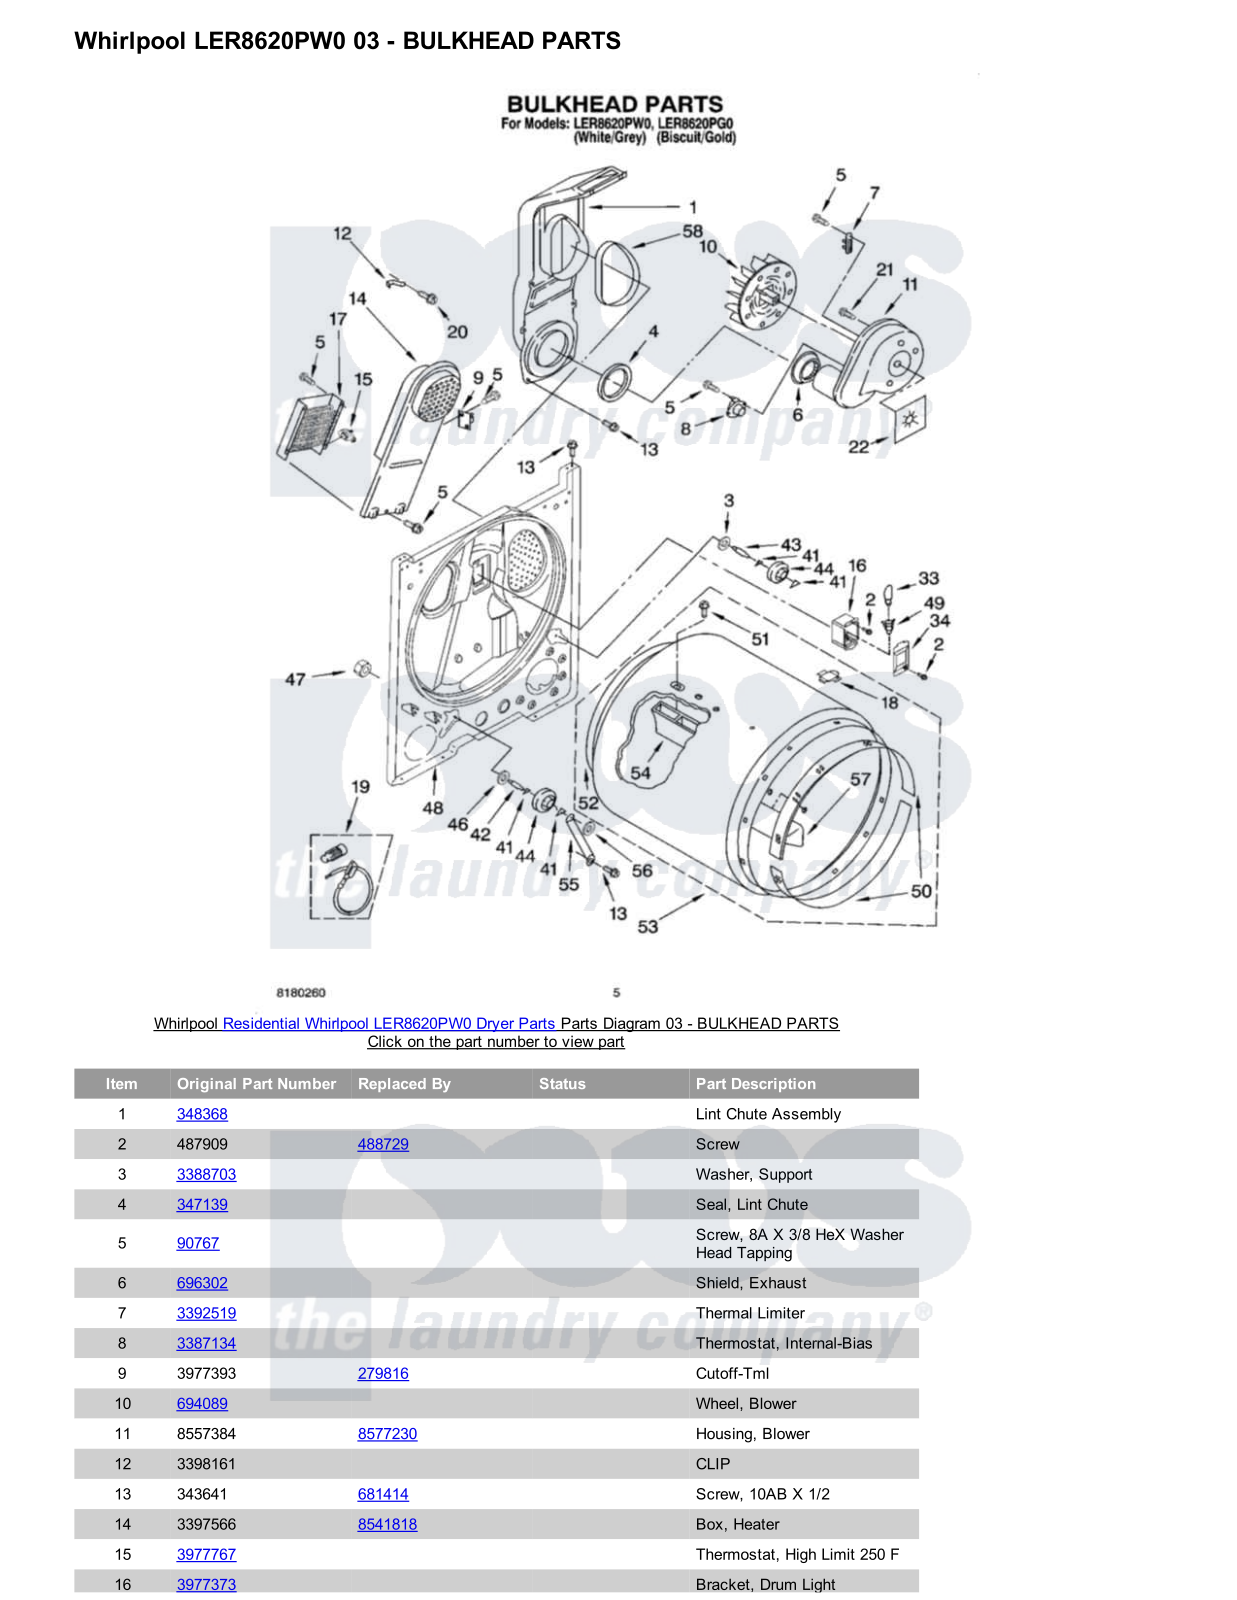 Whirlpool LER8620PW0 Parts Diagram